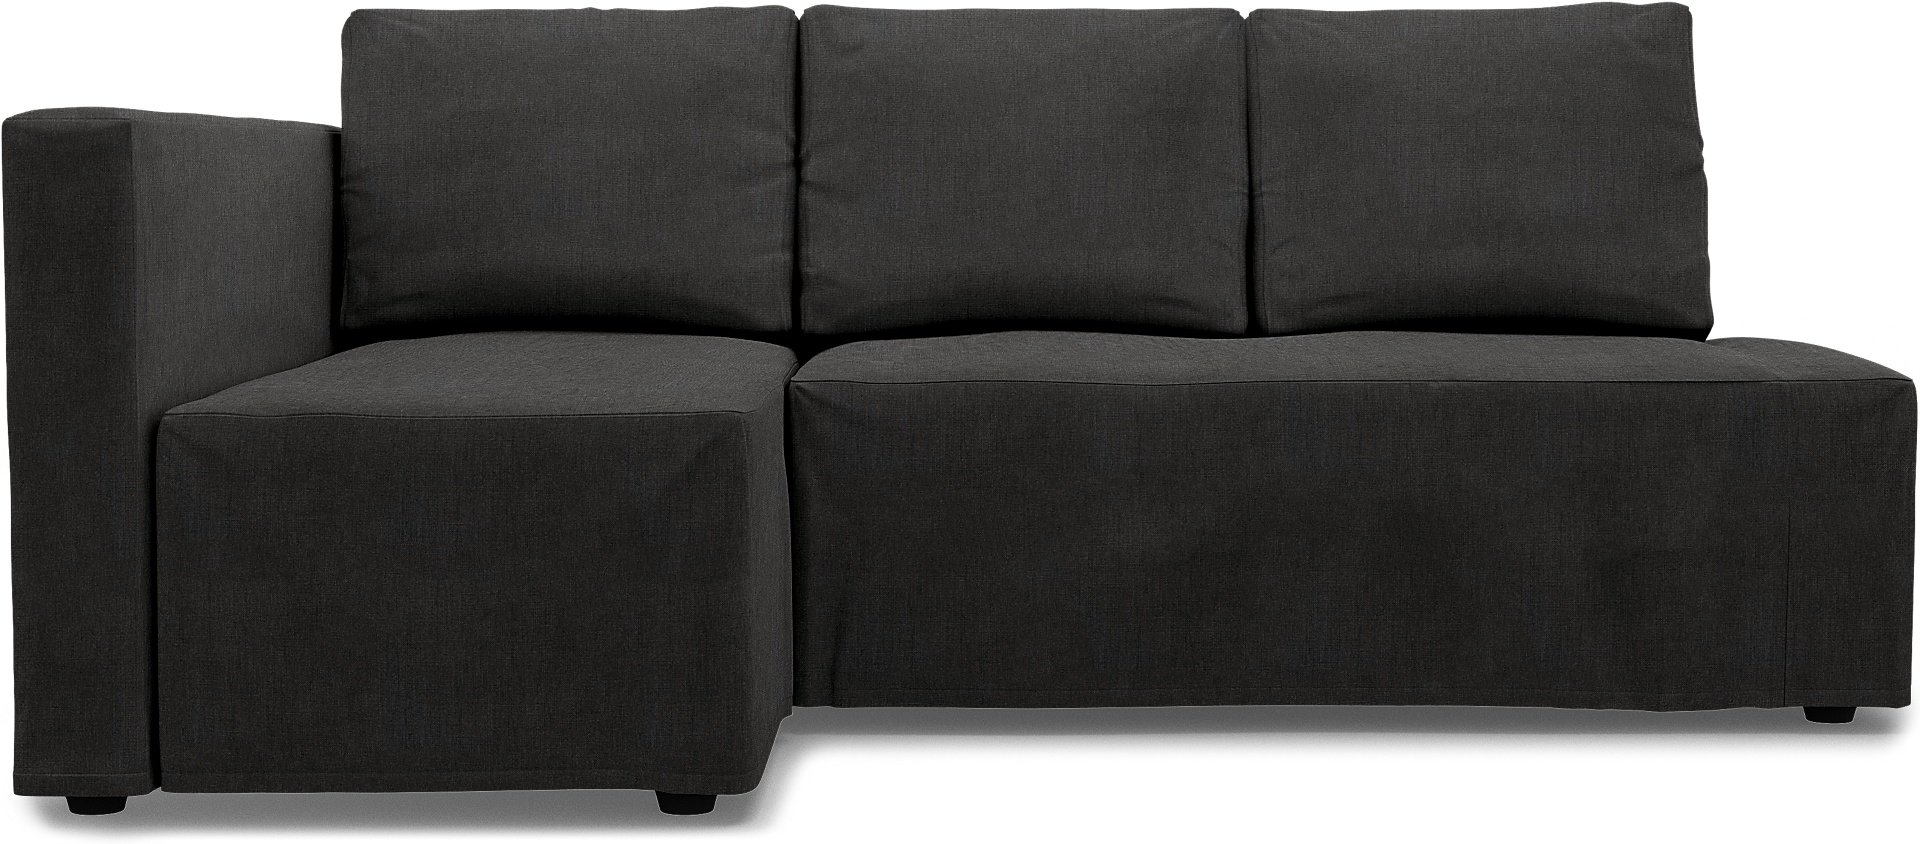 IKEA - Friheten Sofa Bed with Left Chaise Cover, Espresso, Linen - Bemz